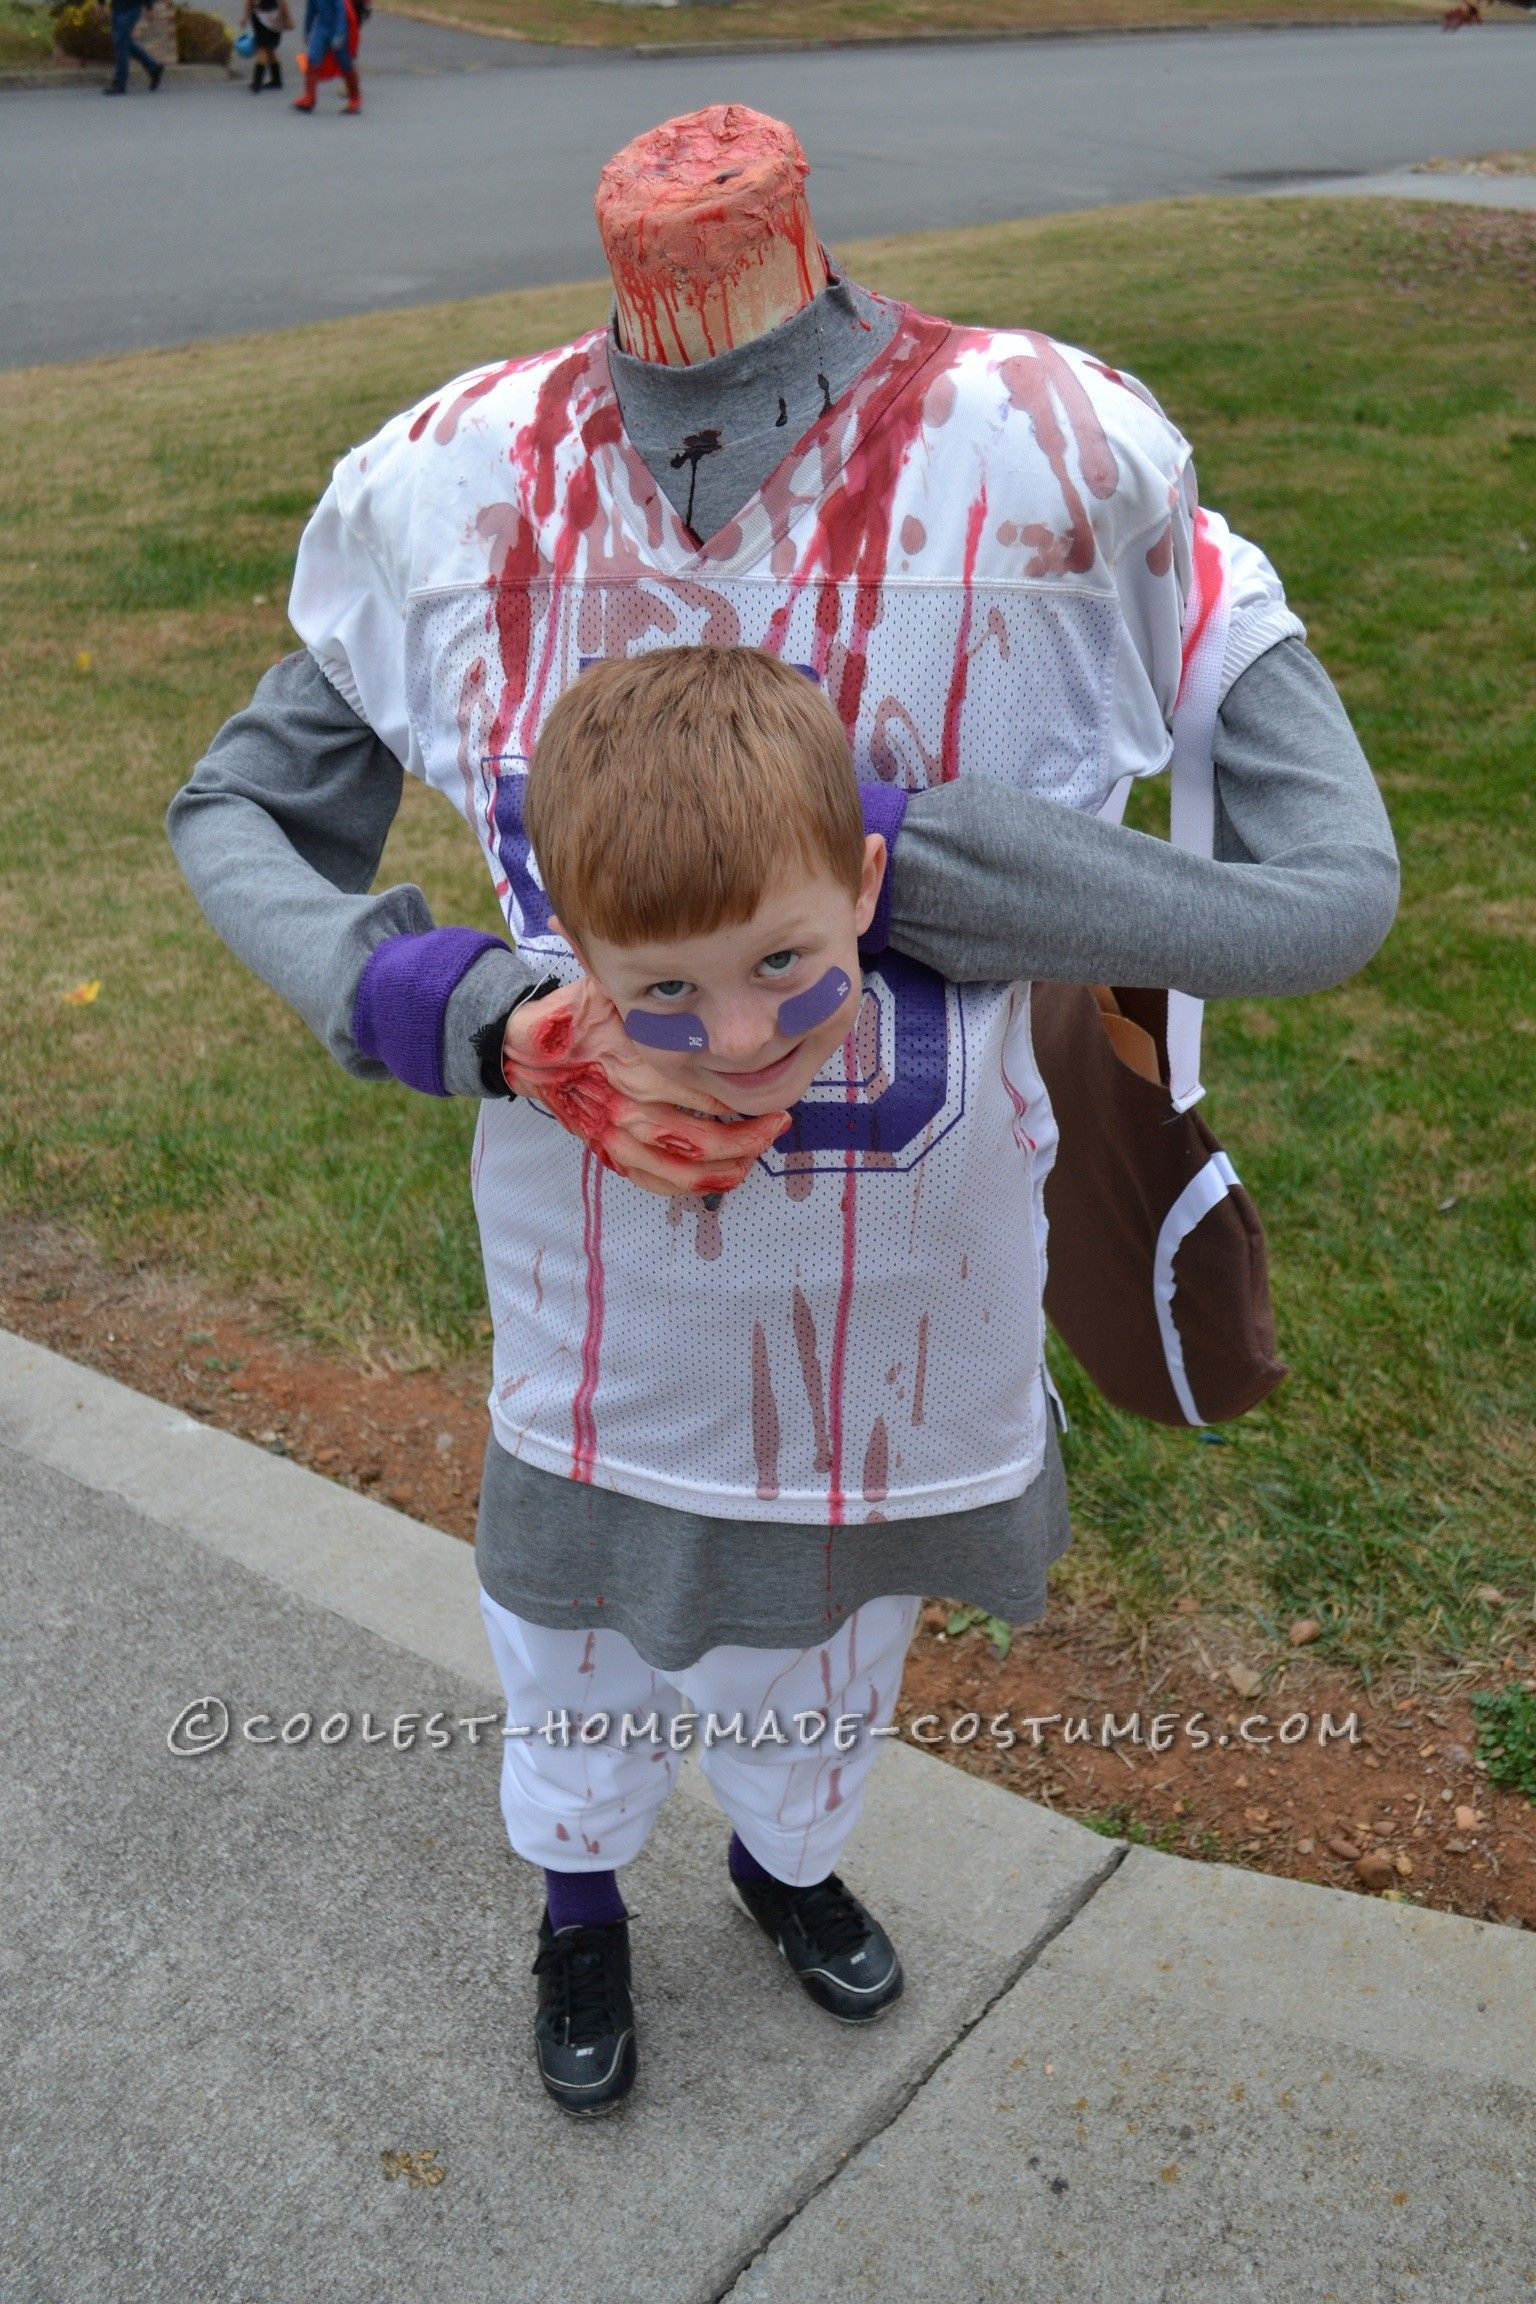 Pinterest DIY Halloween Costumes
 Scary DIY Headless Football Player Halloween Costume in